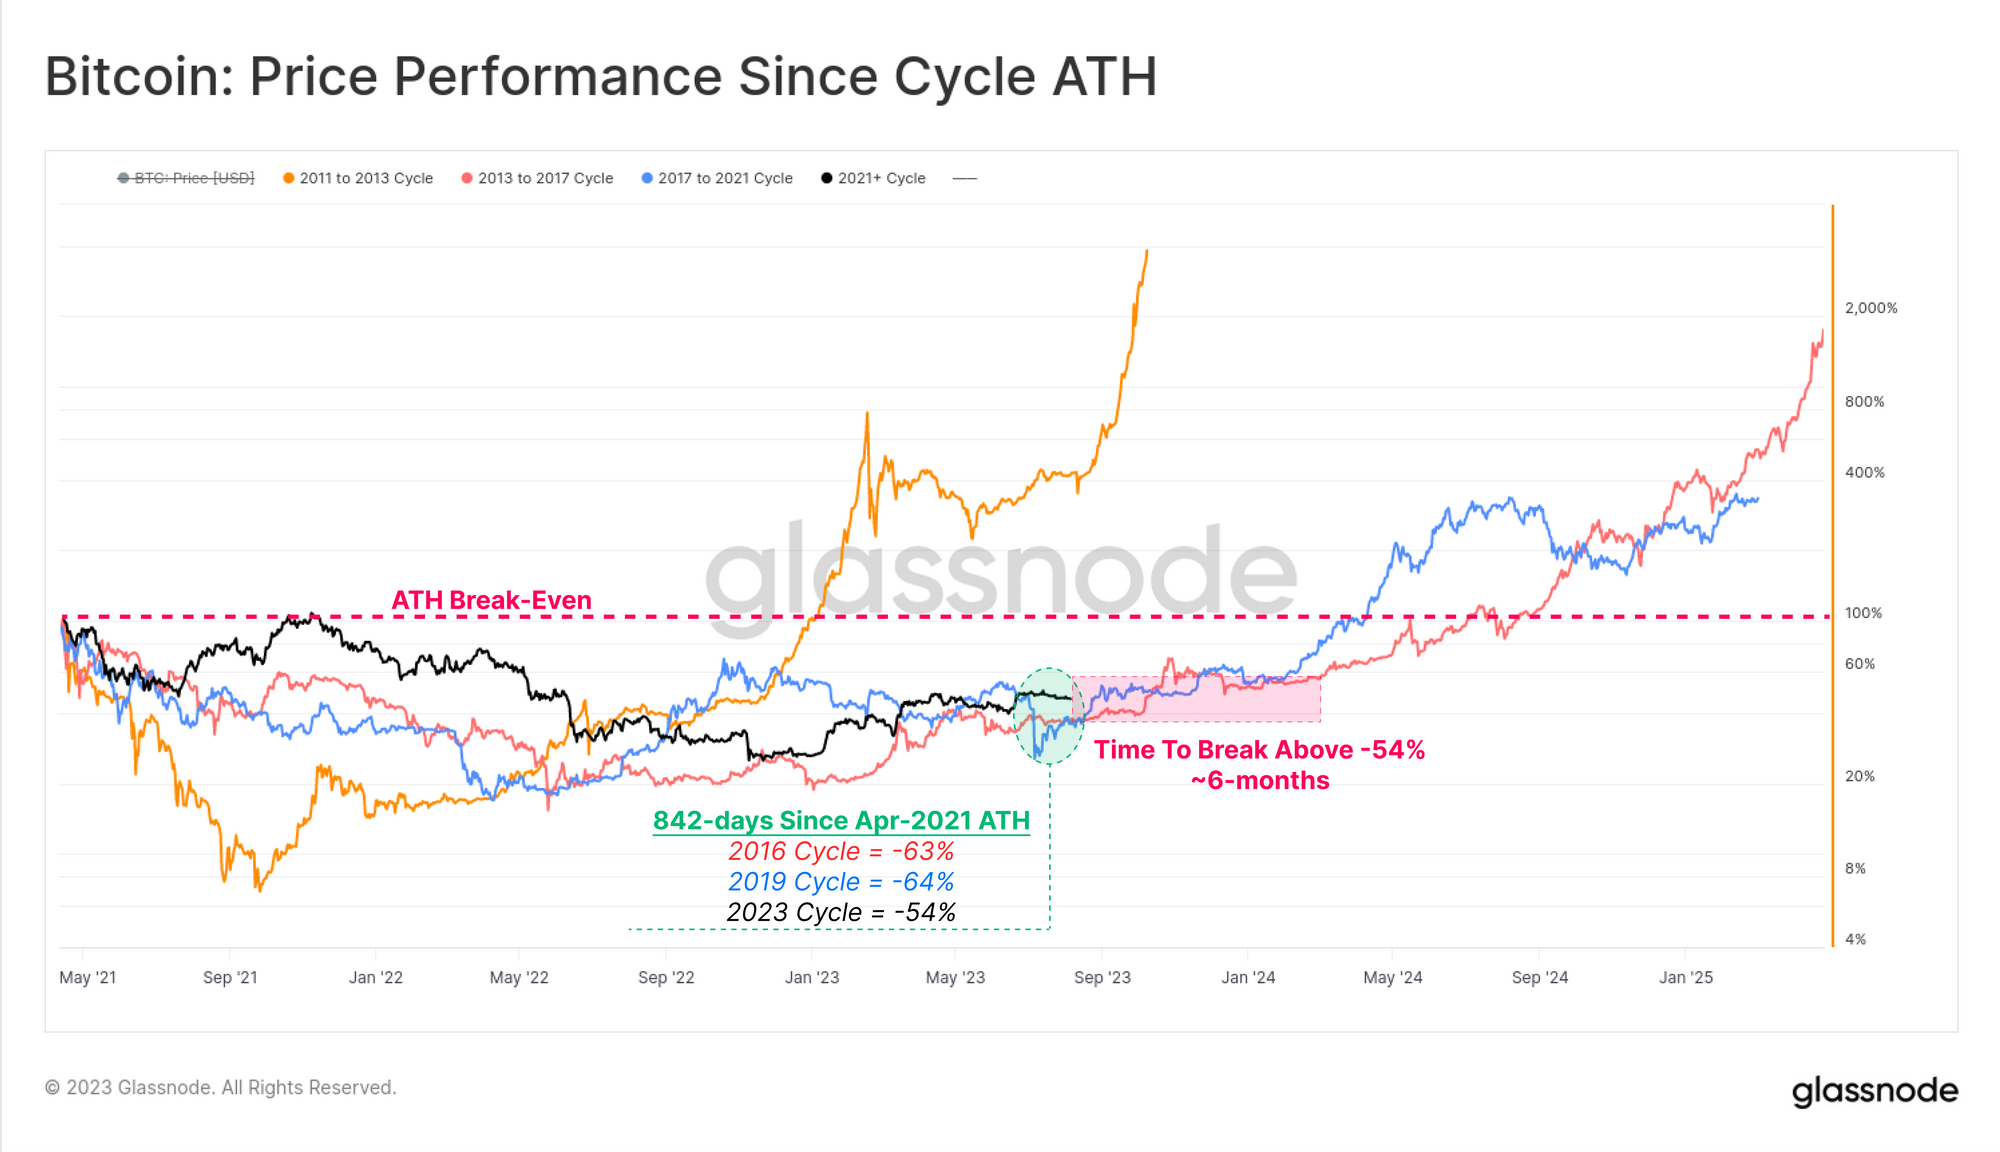 Bitcoin Price Performance Since ATH